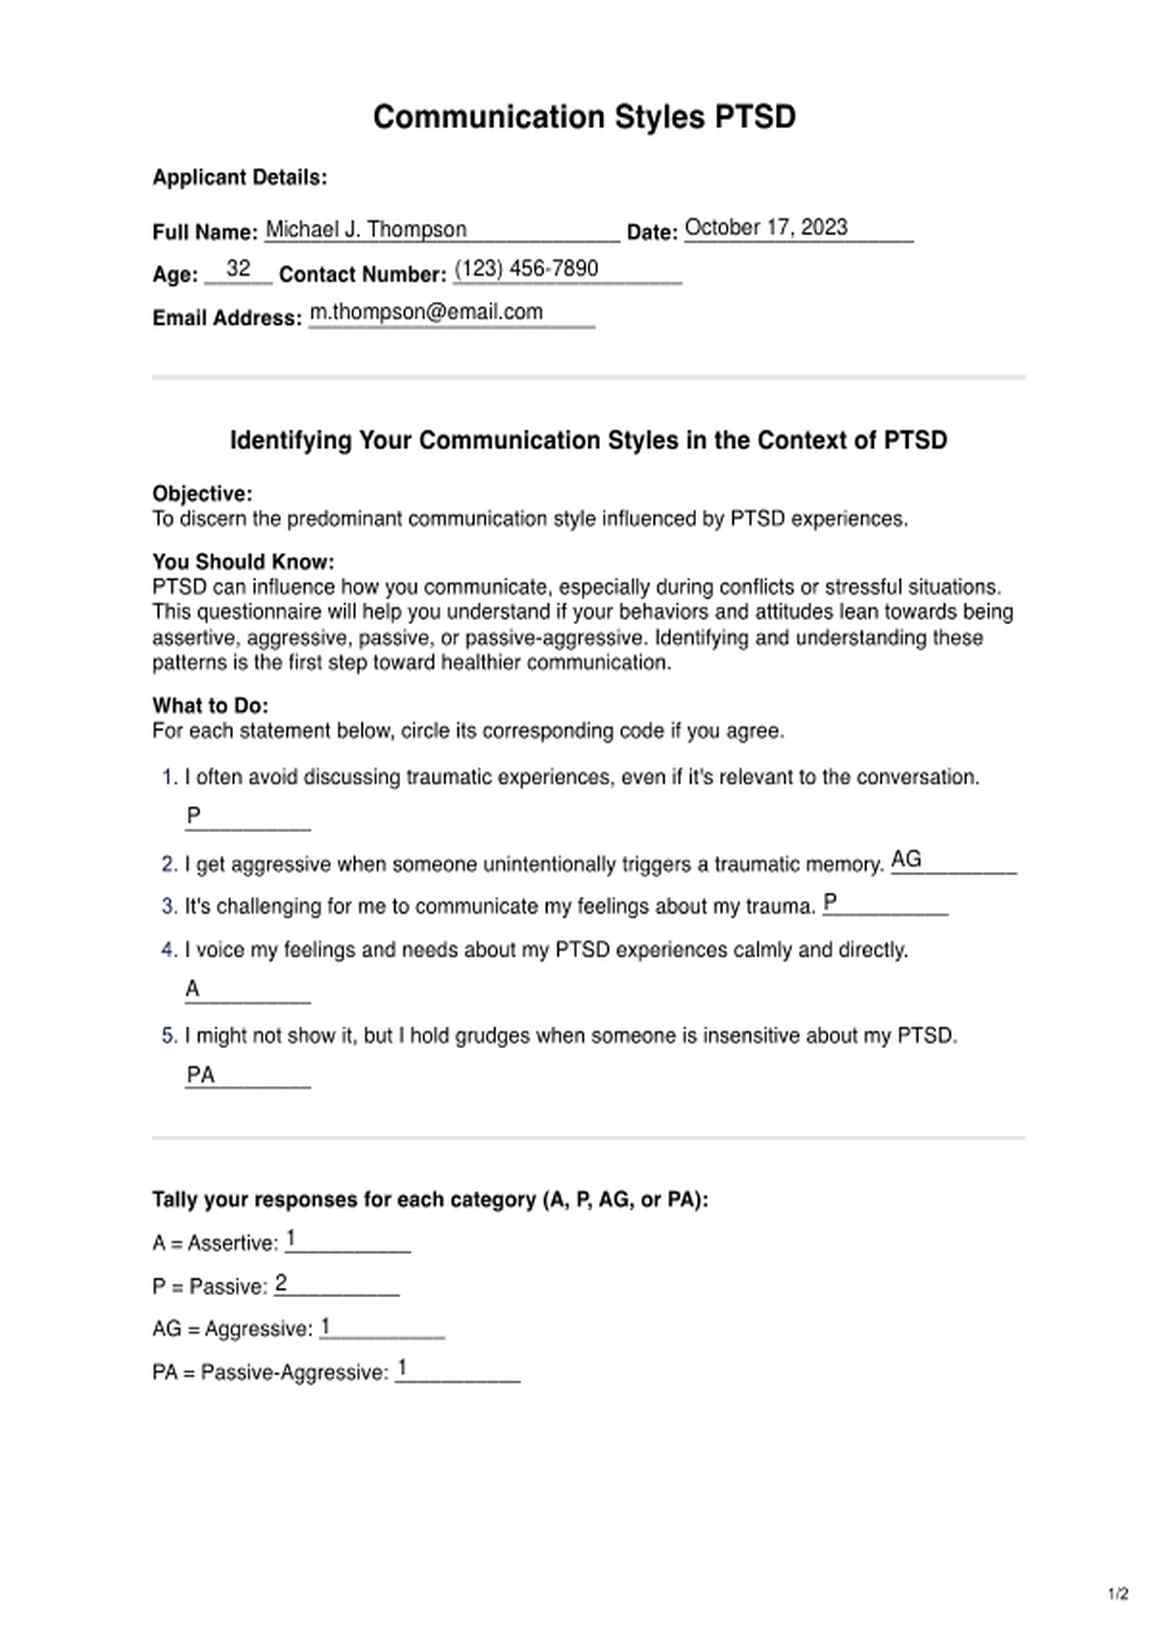 Communication Styles PTSD Worksheet PDF Example